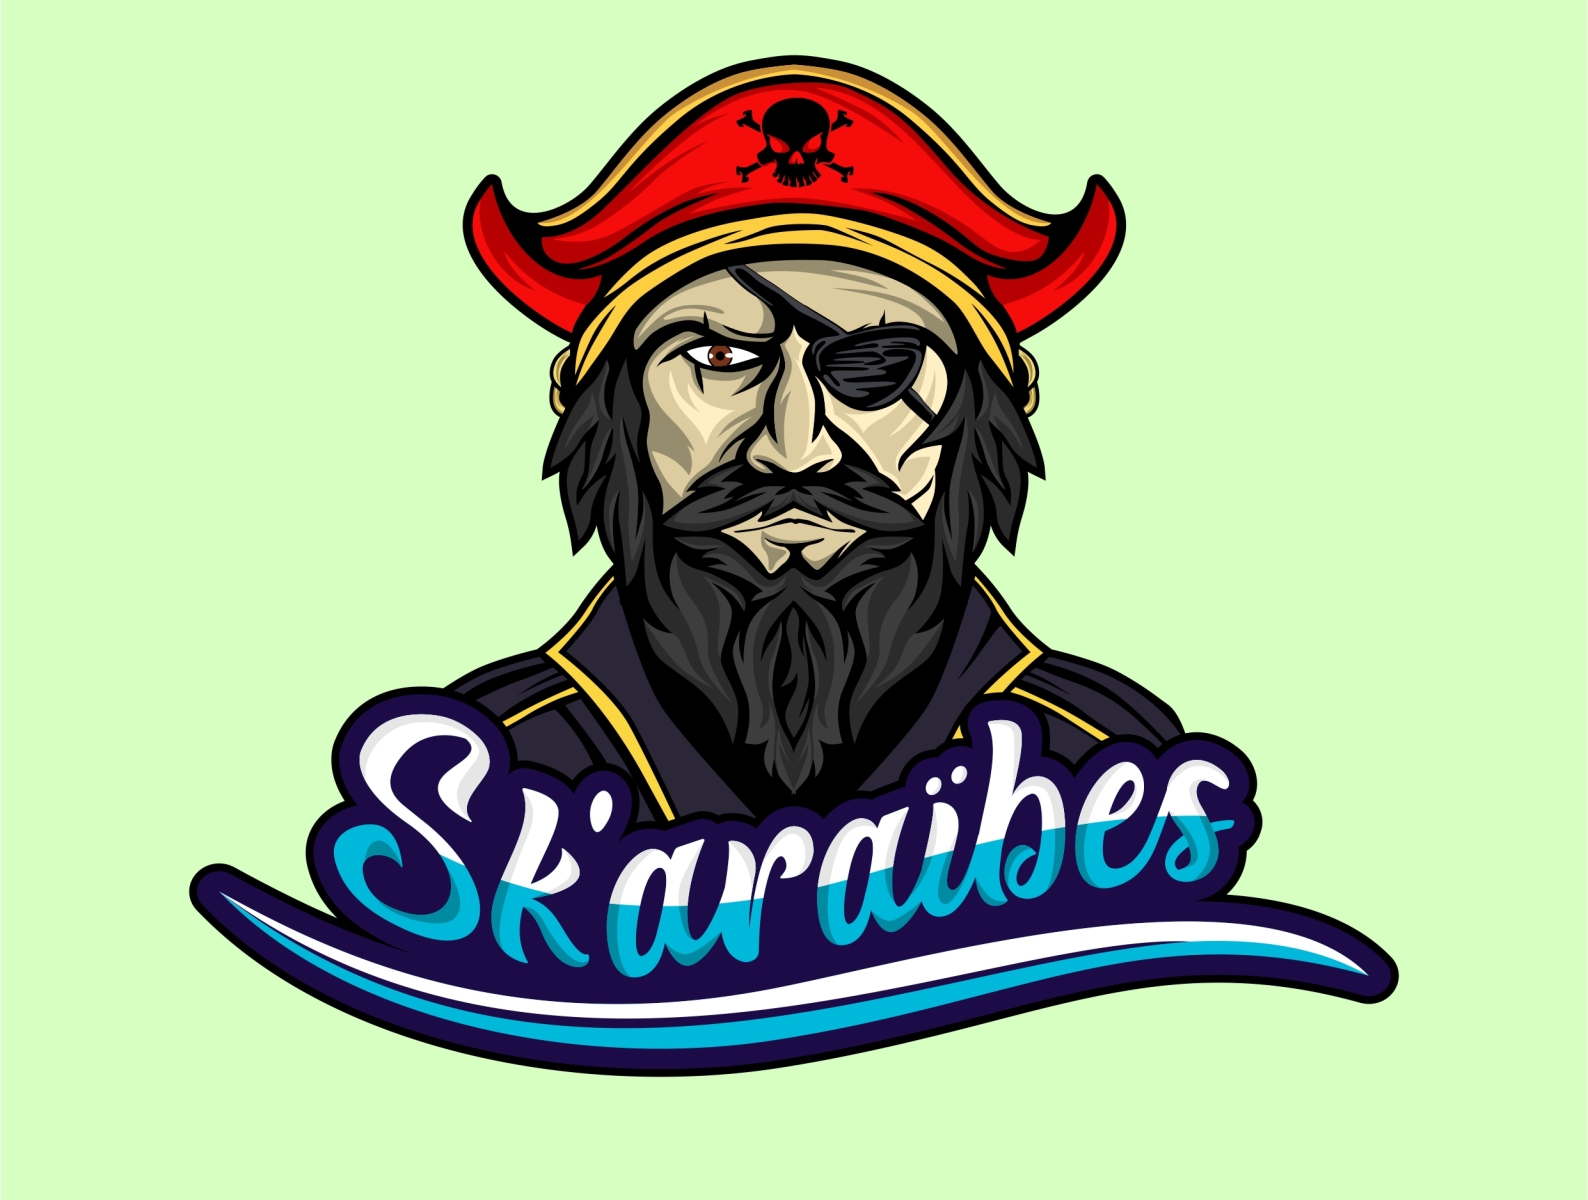 Pirat logo by Nedeliov Adrian on Dribbble